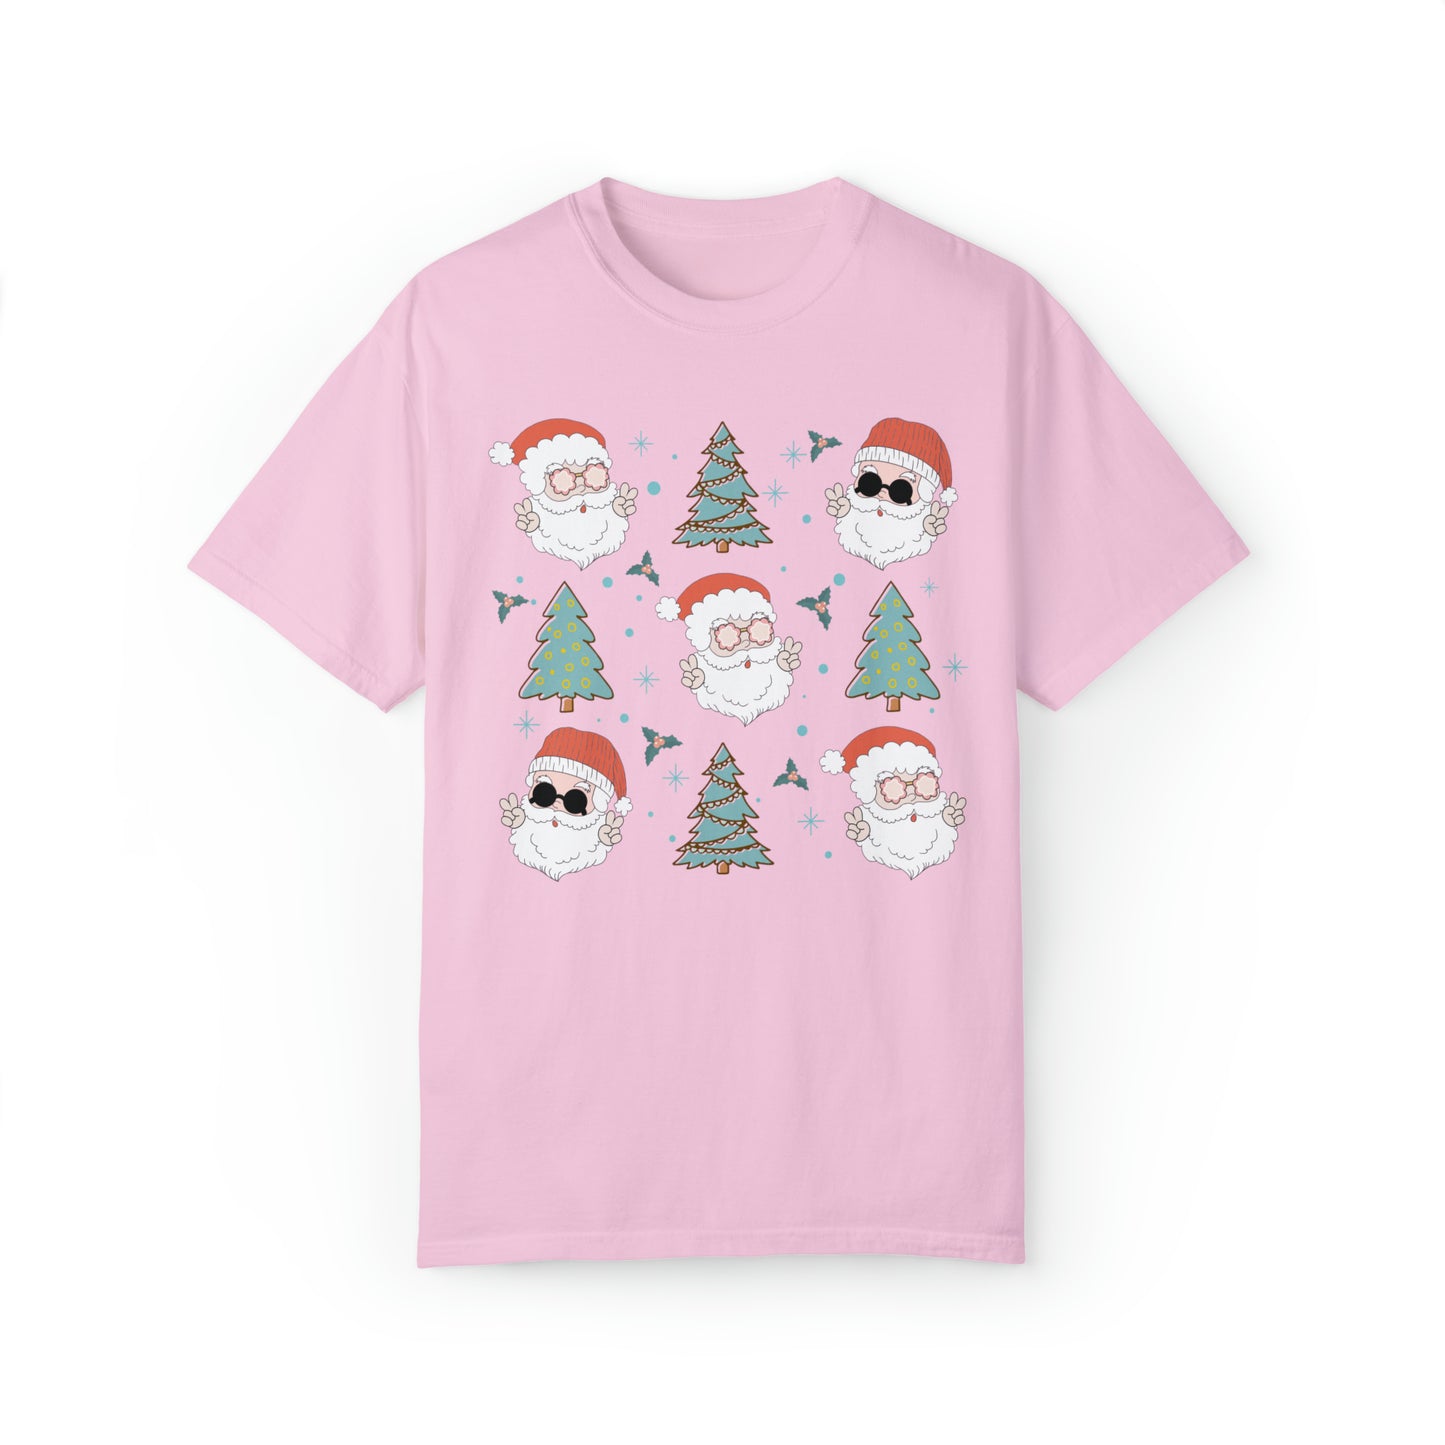 Groovy Santa Collage Shirt